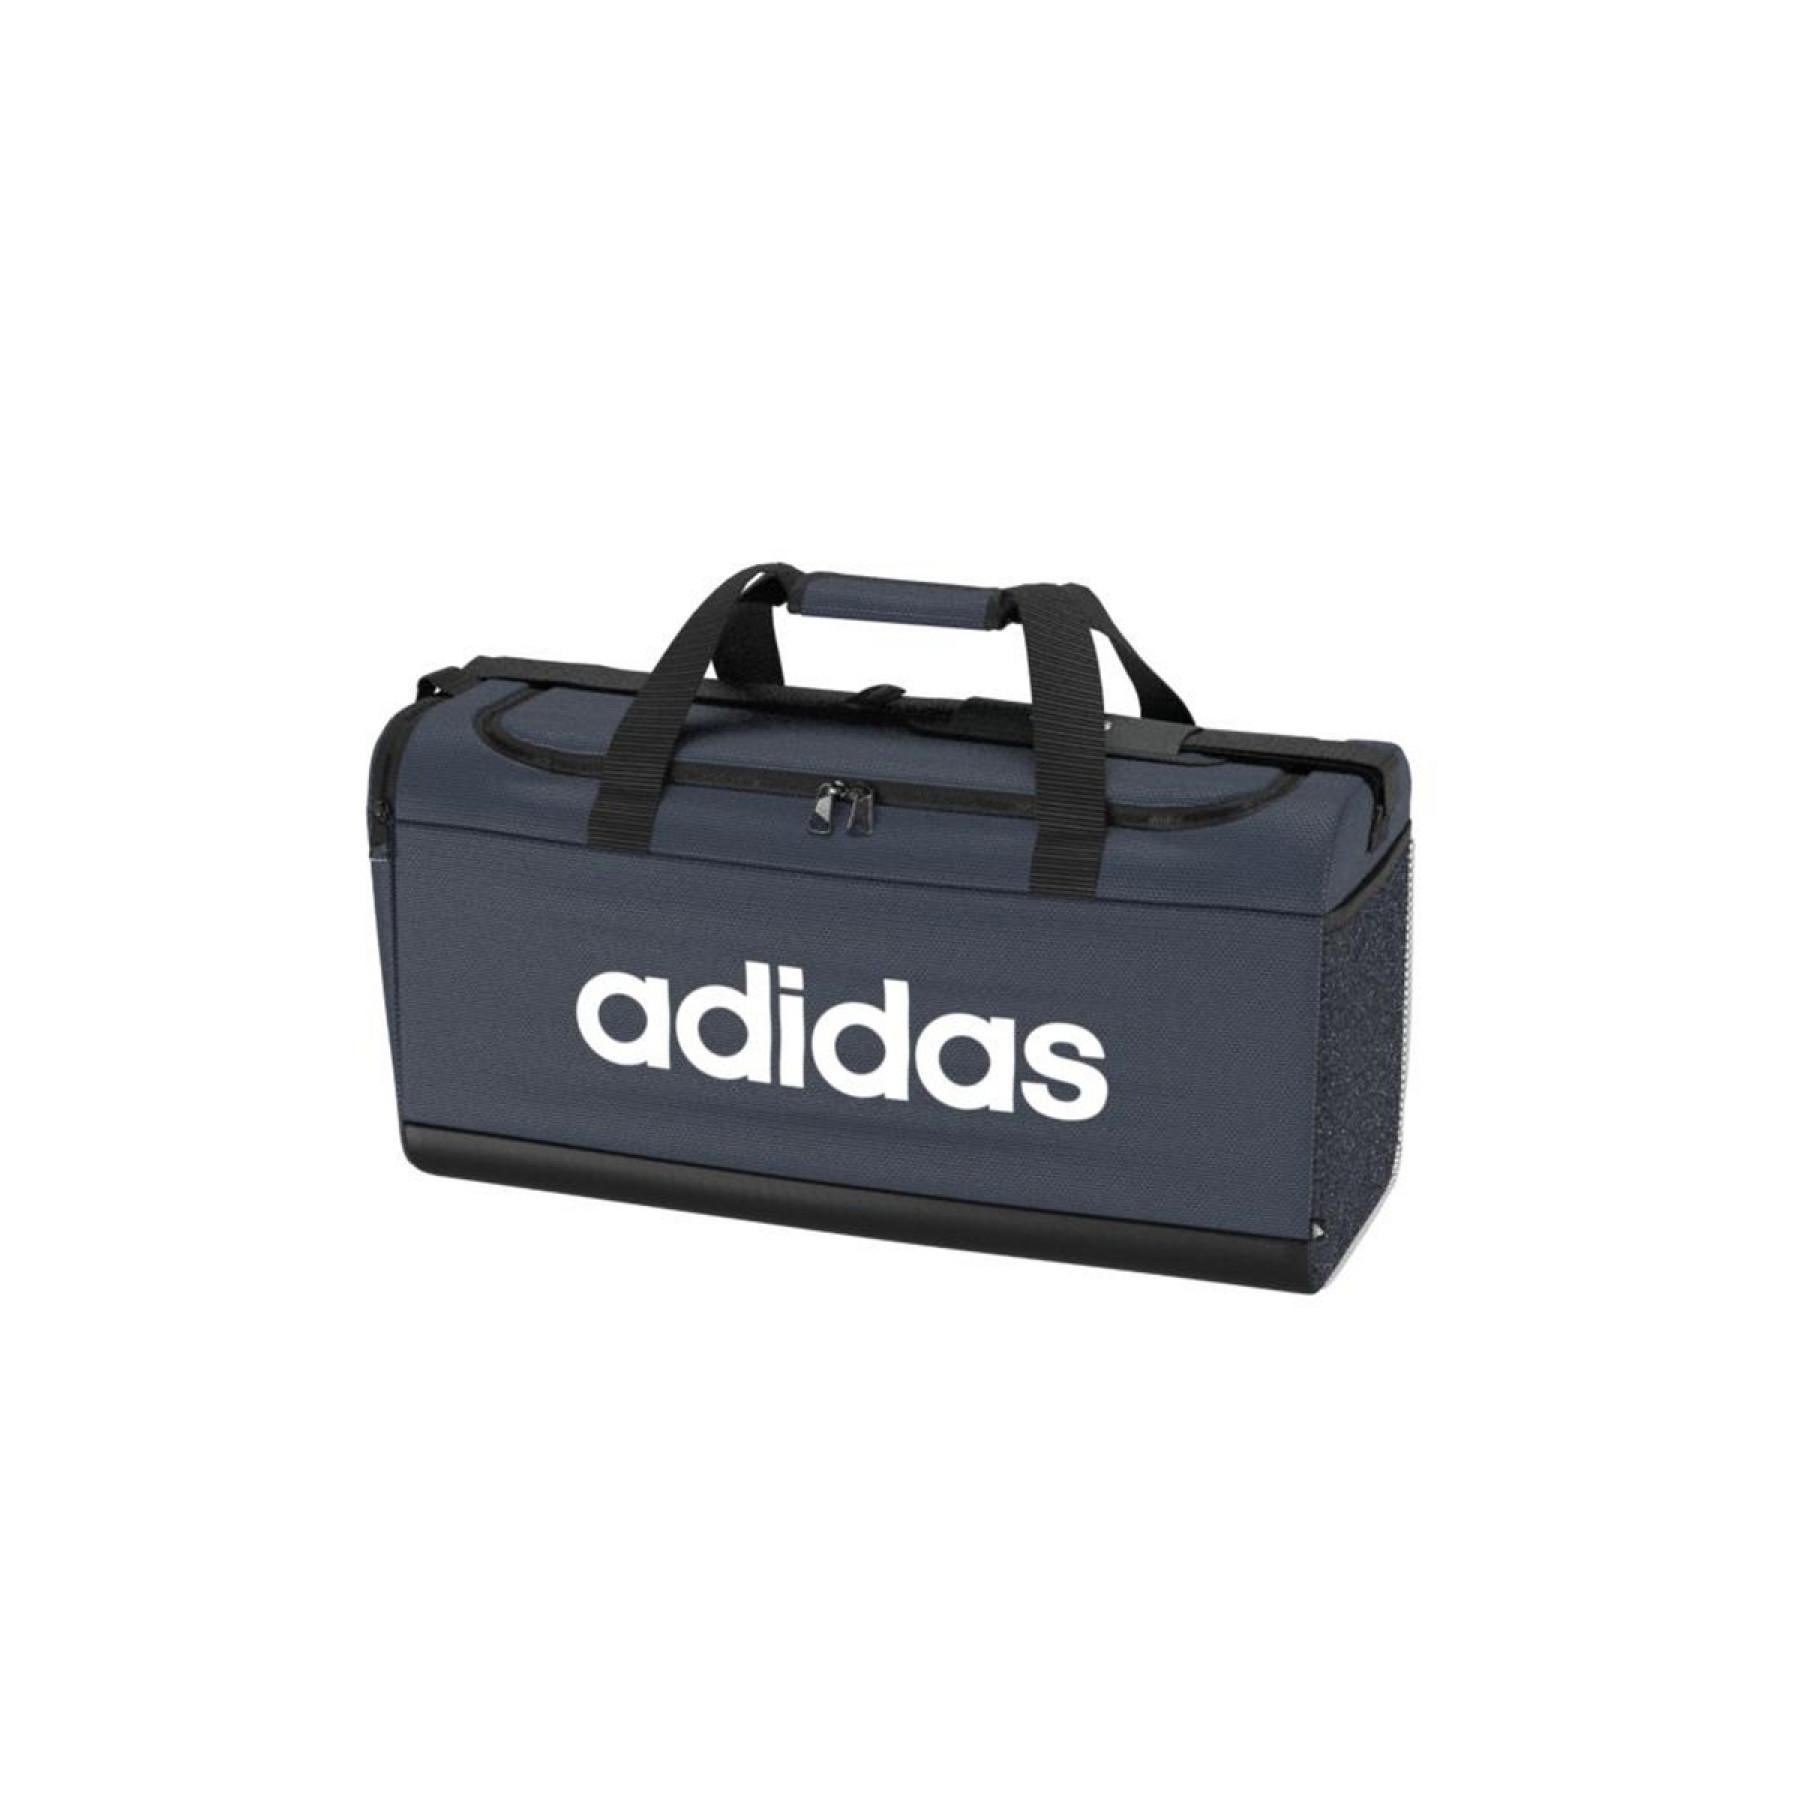 Sports bag adidas Essentials Logo Medium